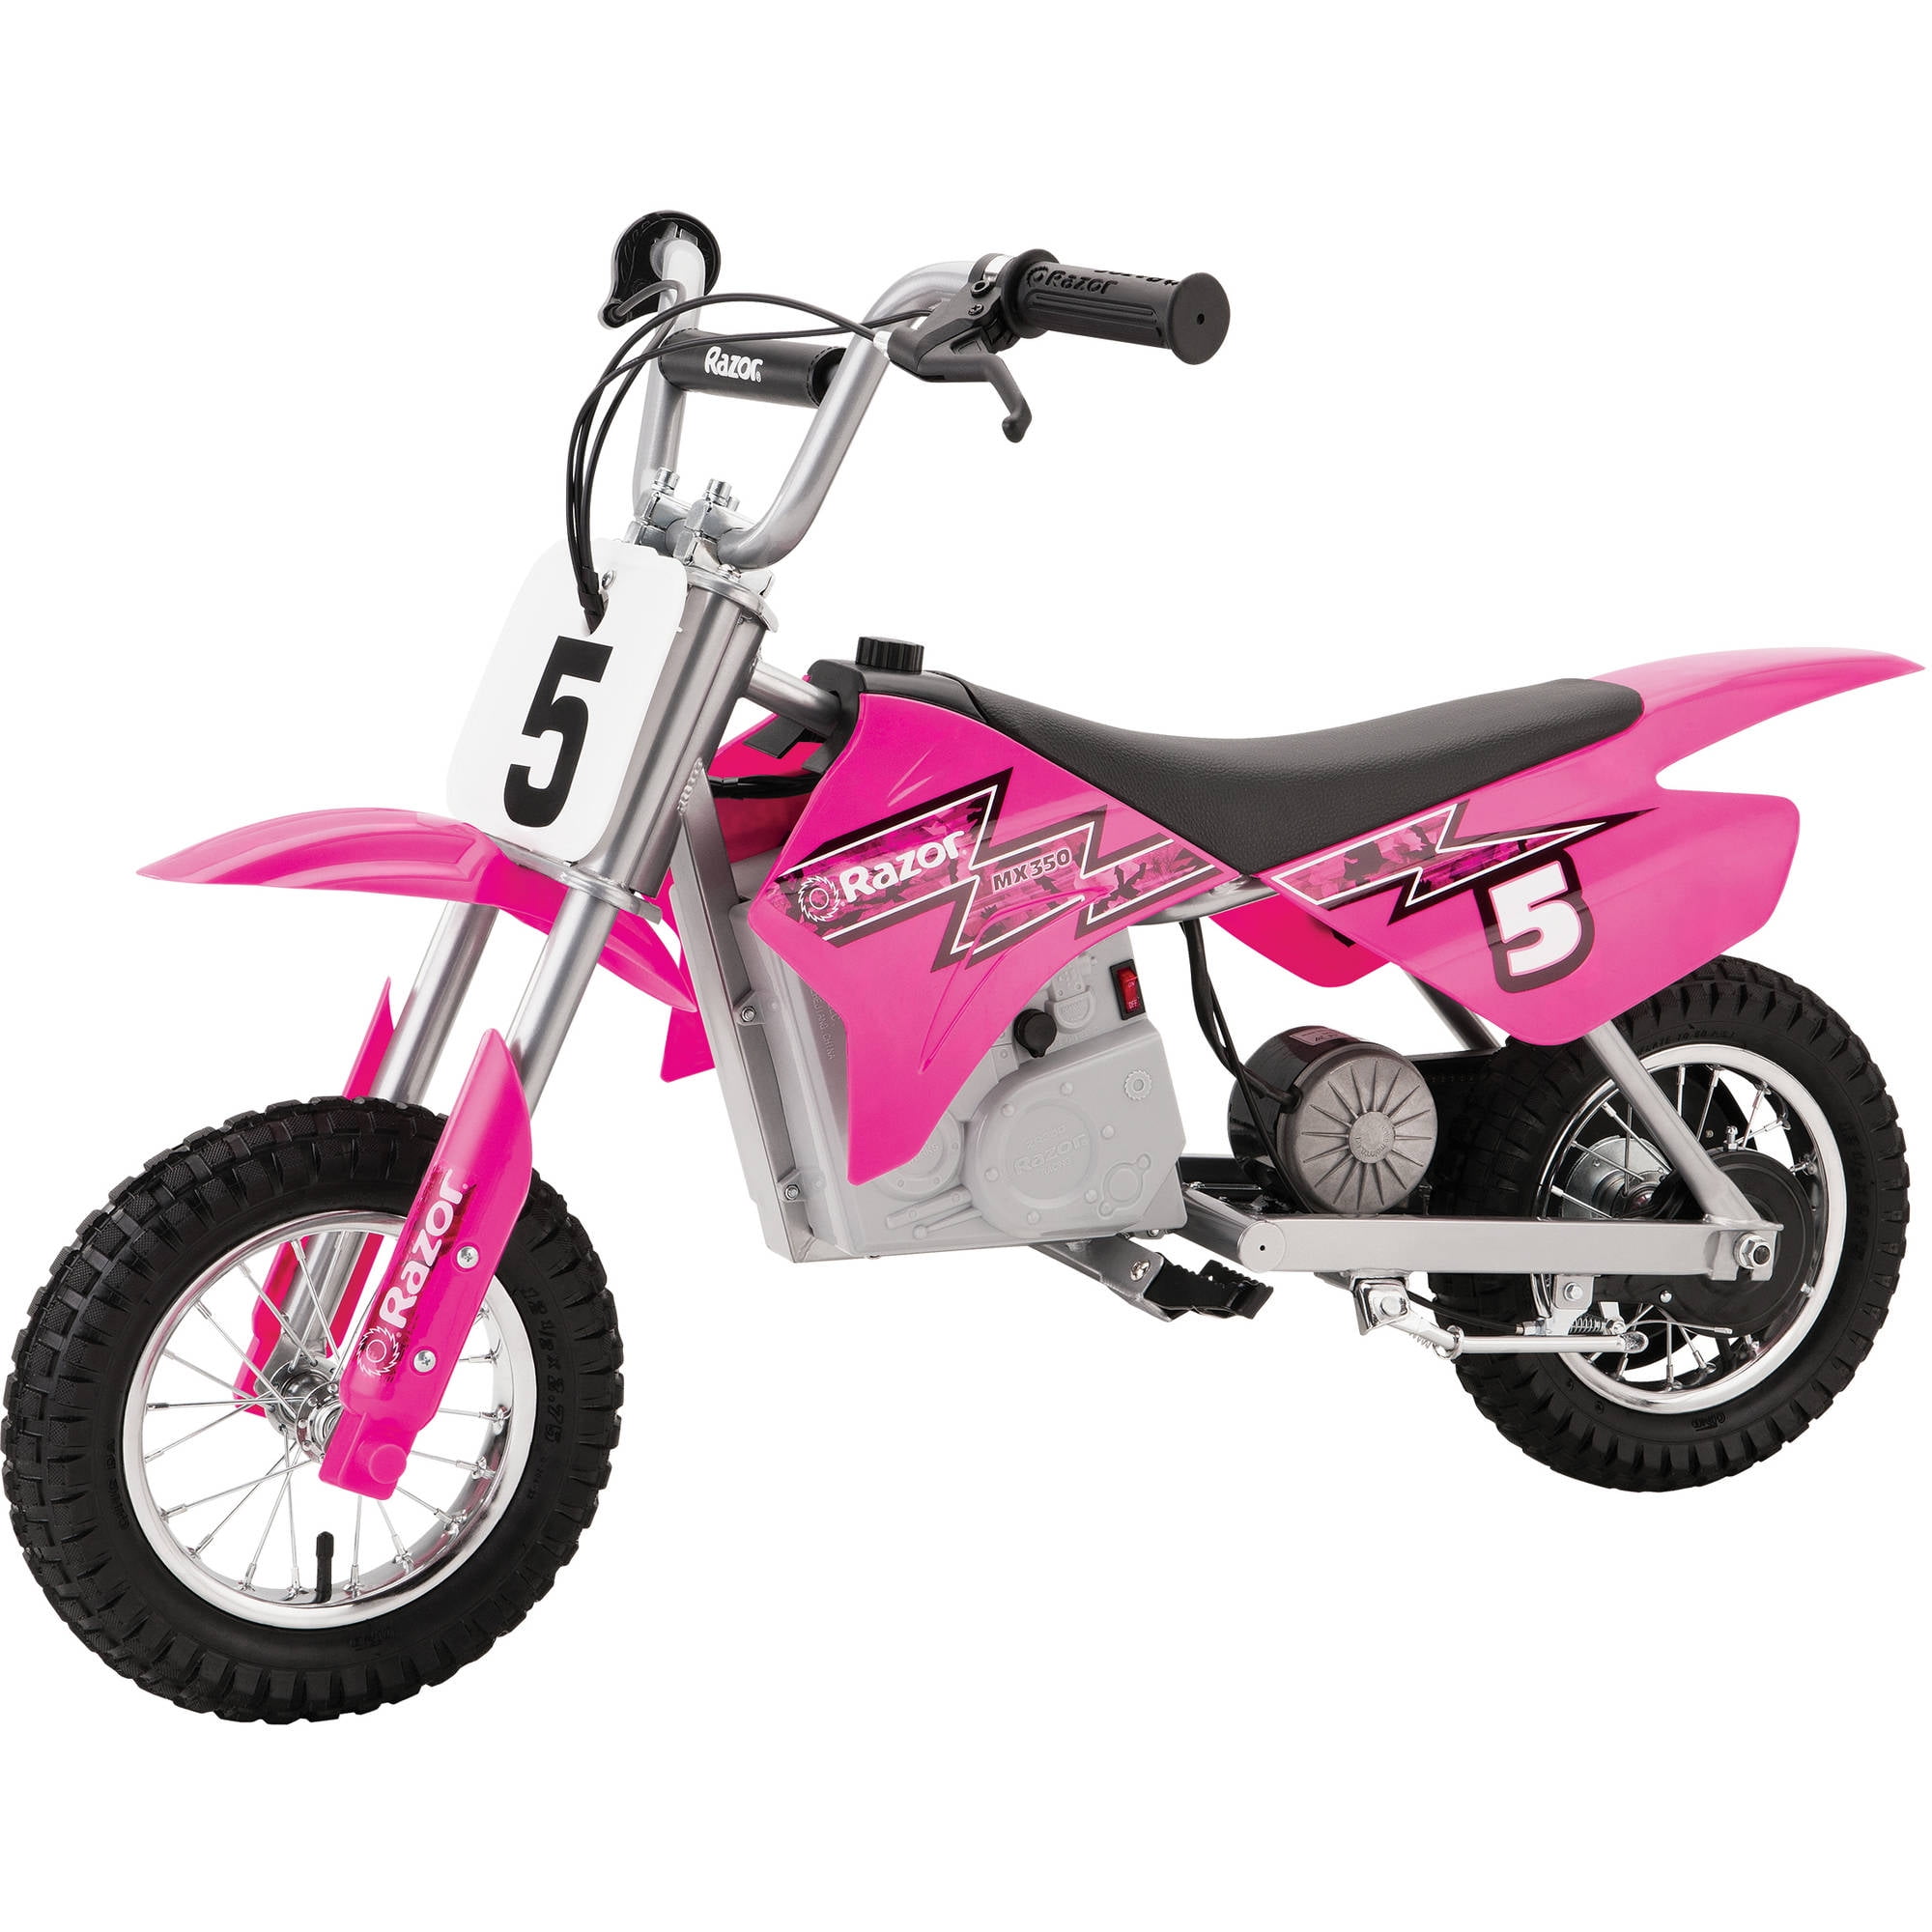 Razor MX350 24V Dirt Rocket Electric Ride on Motocross Bike- Pink